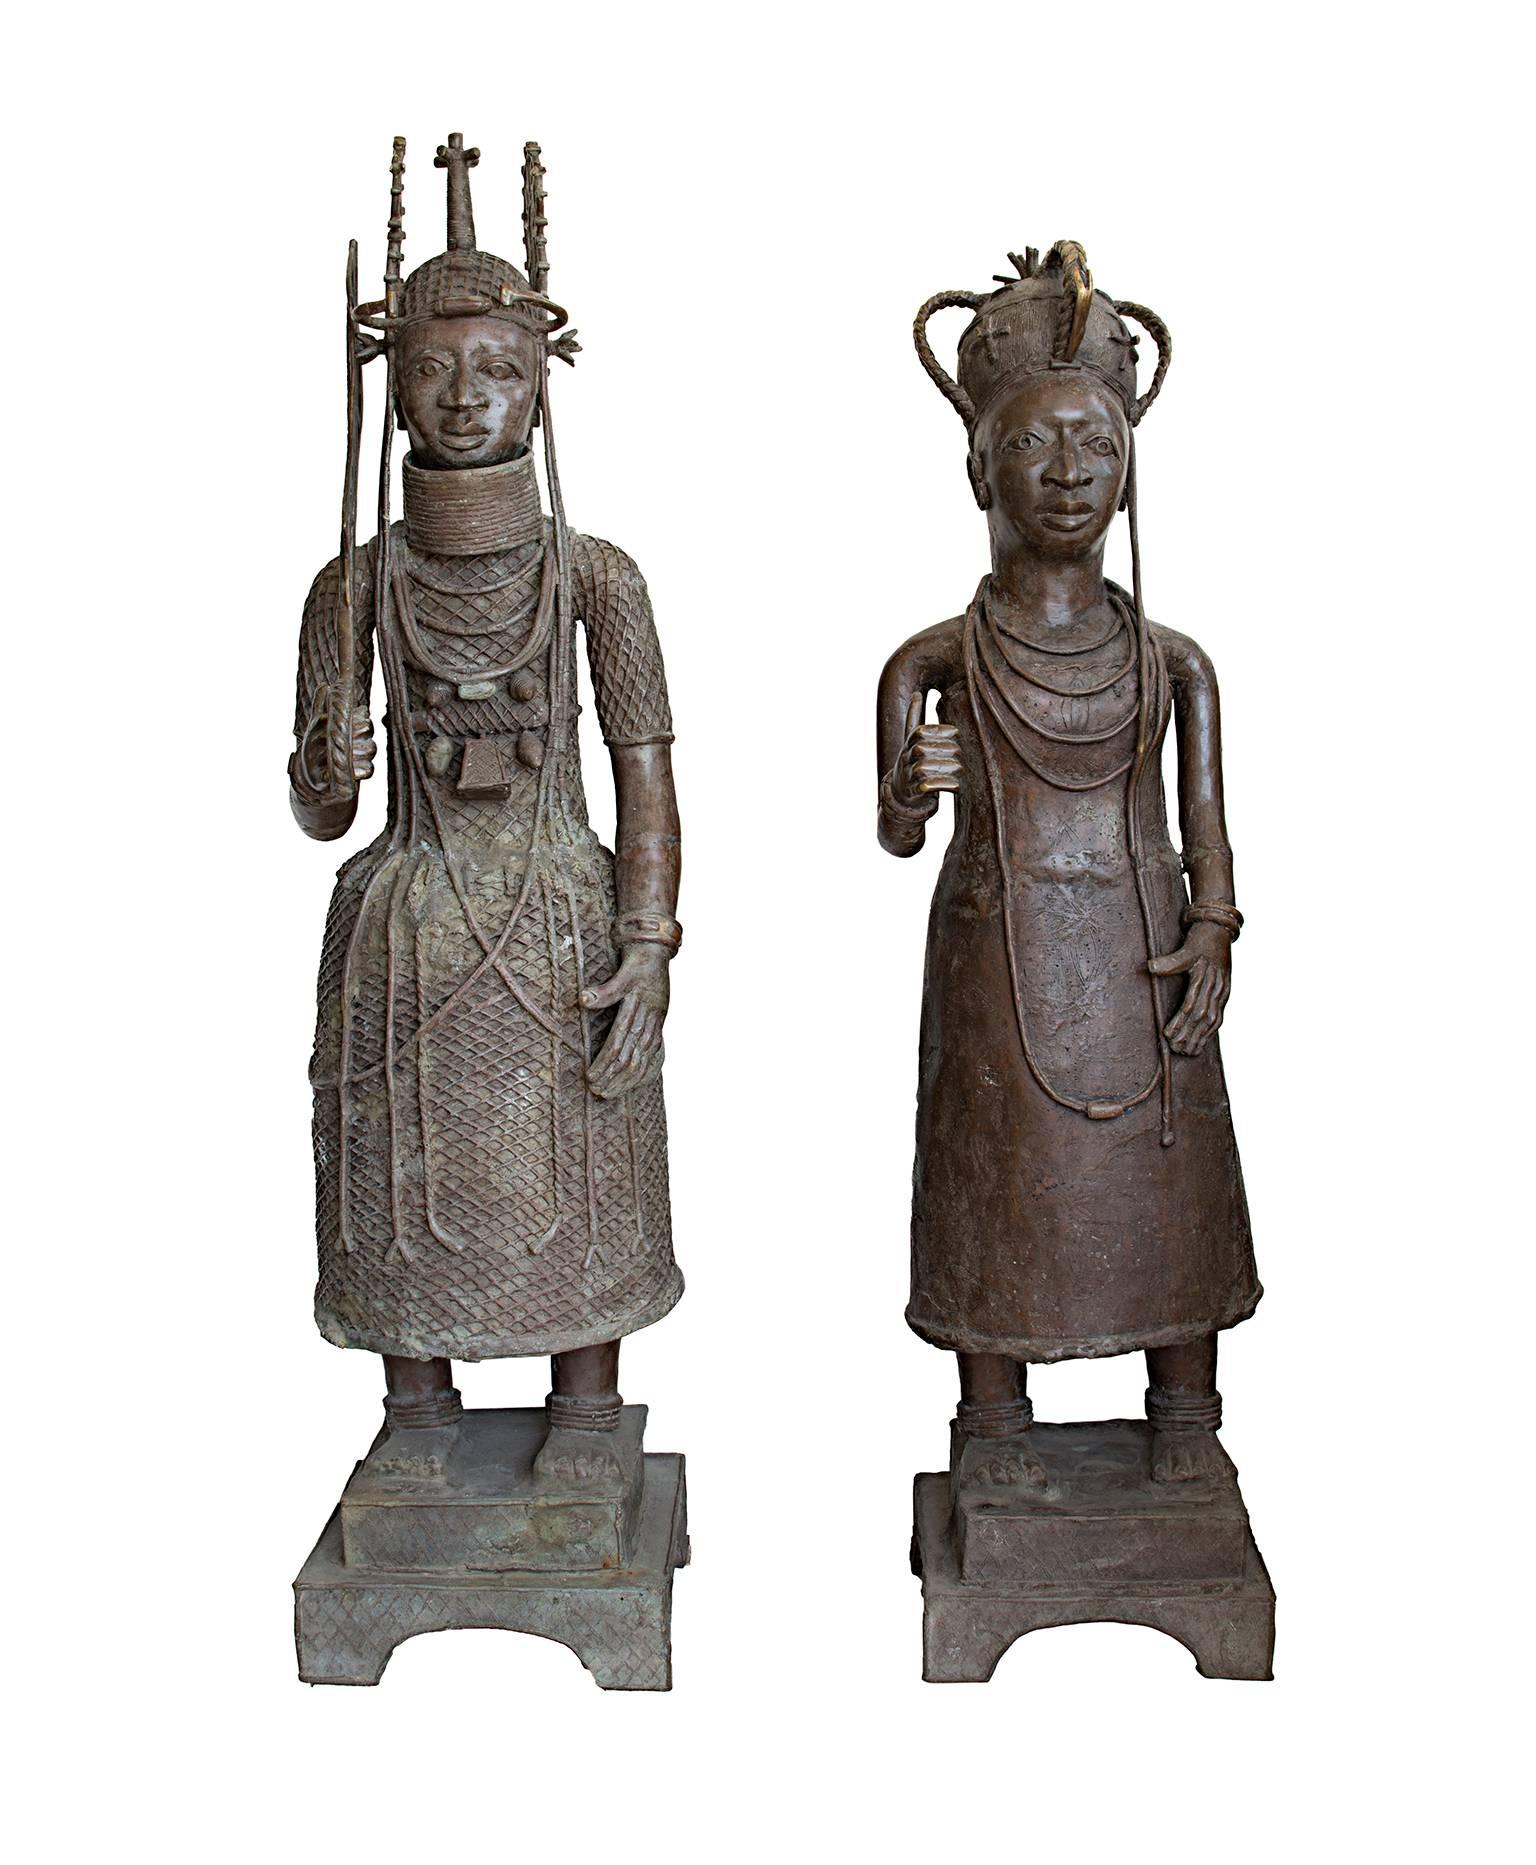 "King & Queen, Benin Kingdom Nigeria," Bronze Statues created circa 1900